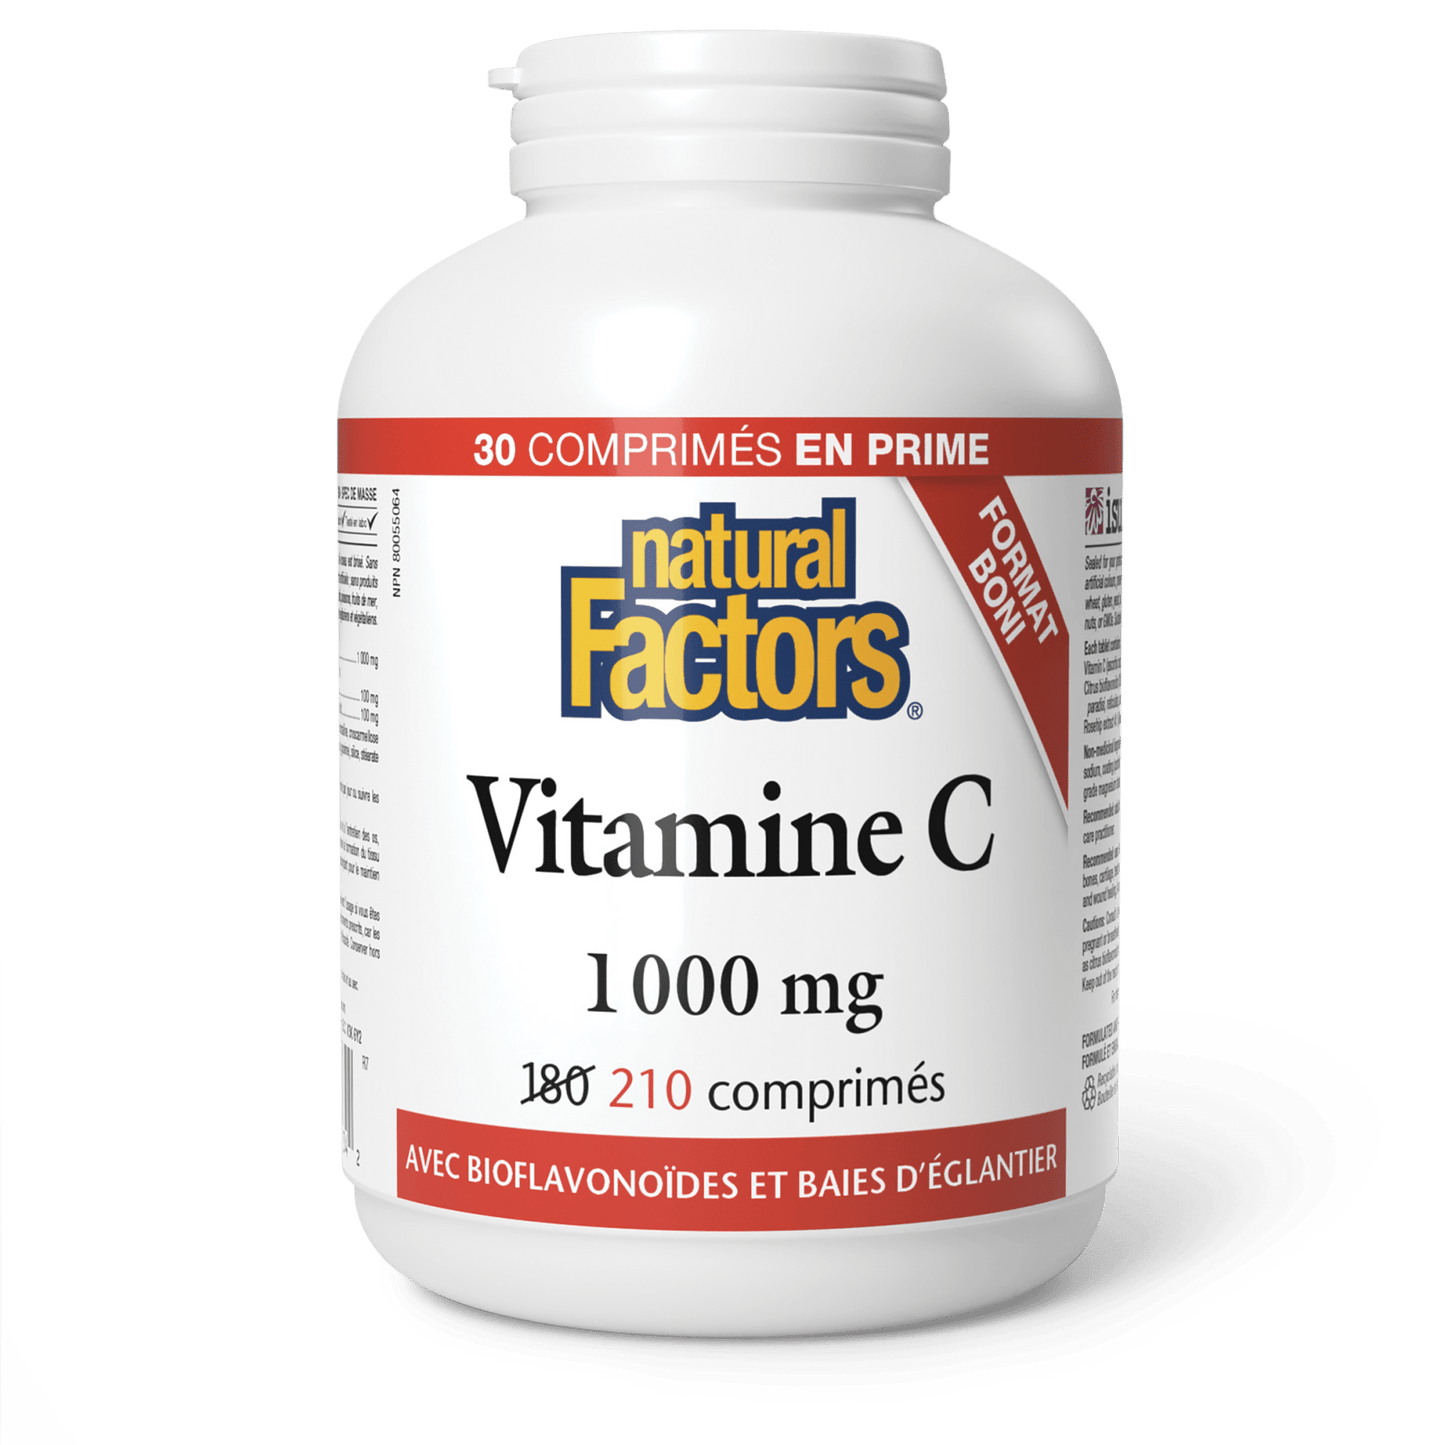 Vitamine C 1 000 mg, Natural Factors|v|image|8134